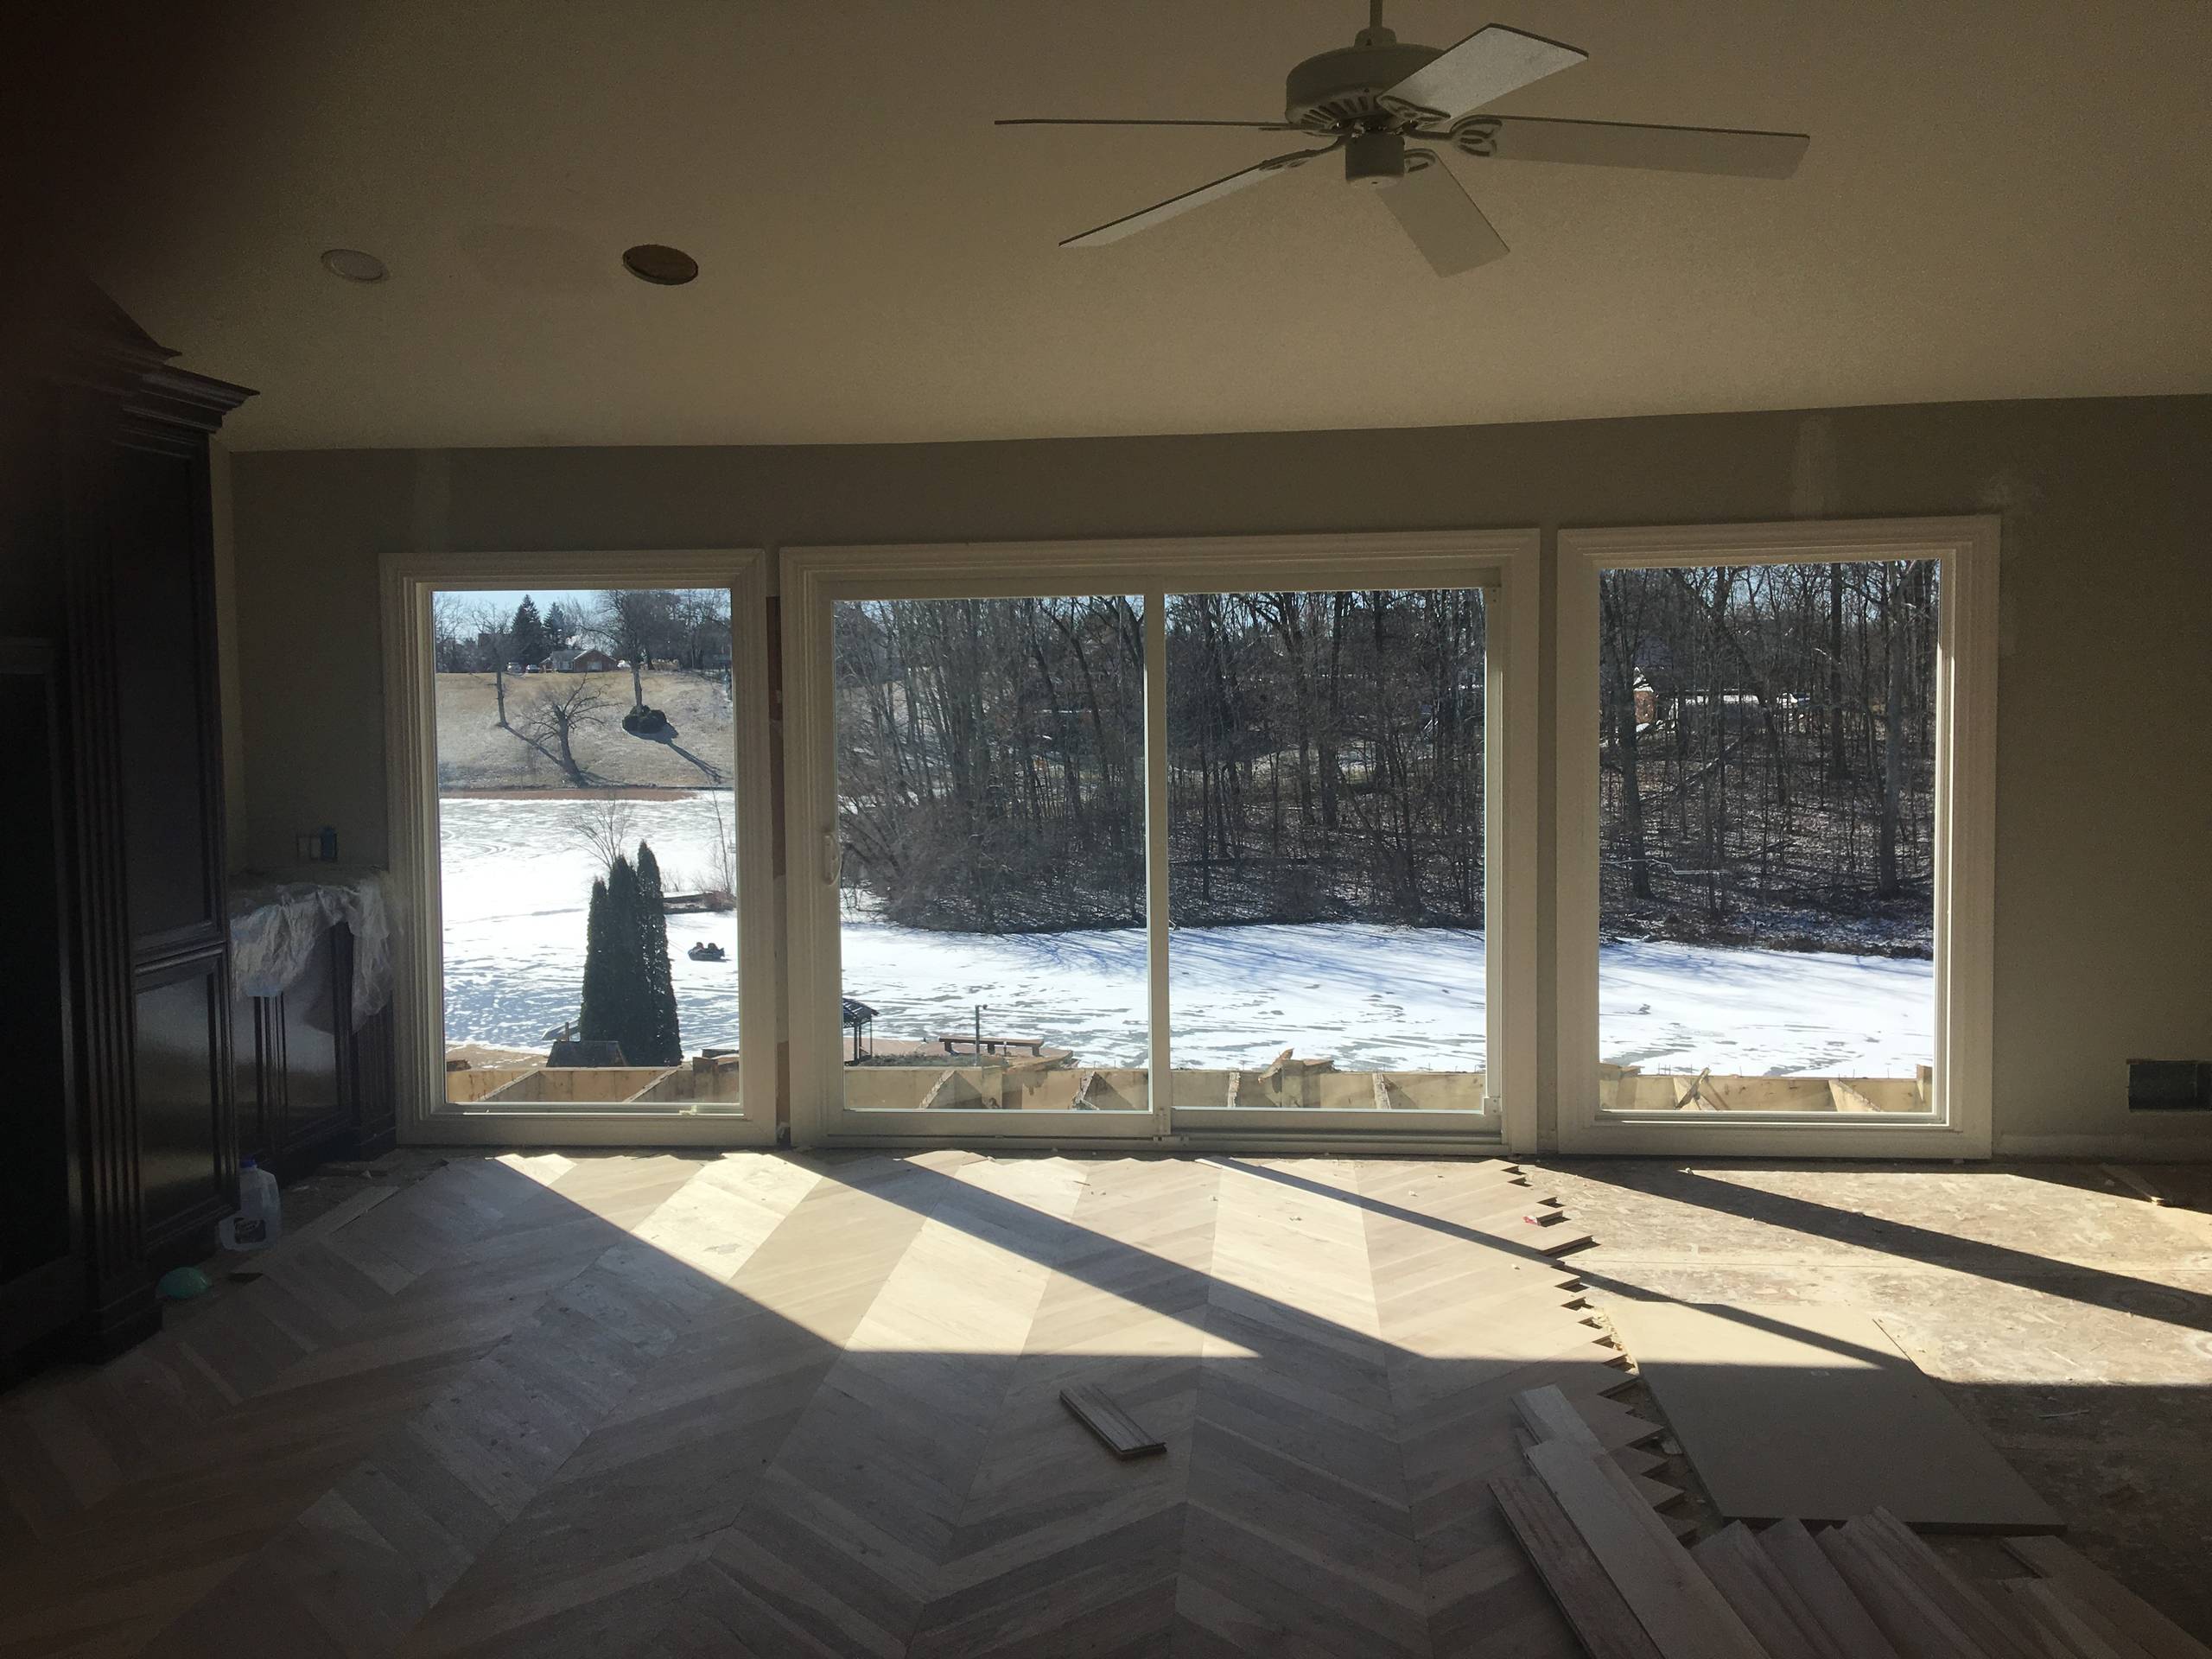 Oxbow lake hardwood flooring and windows